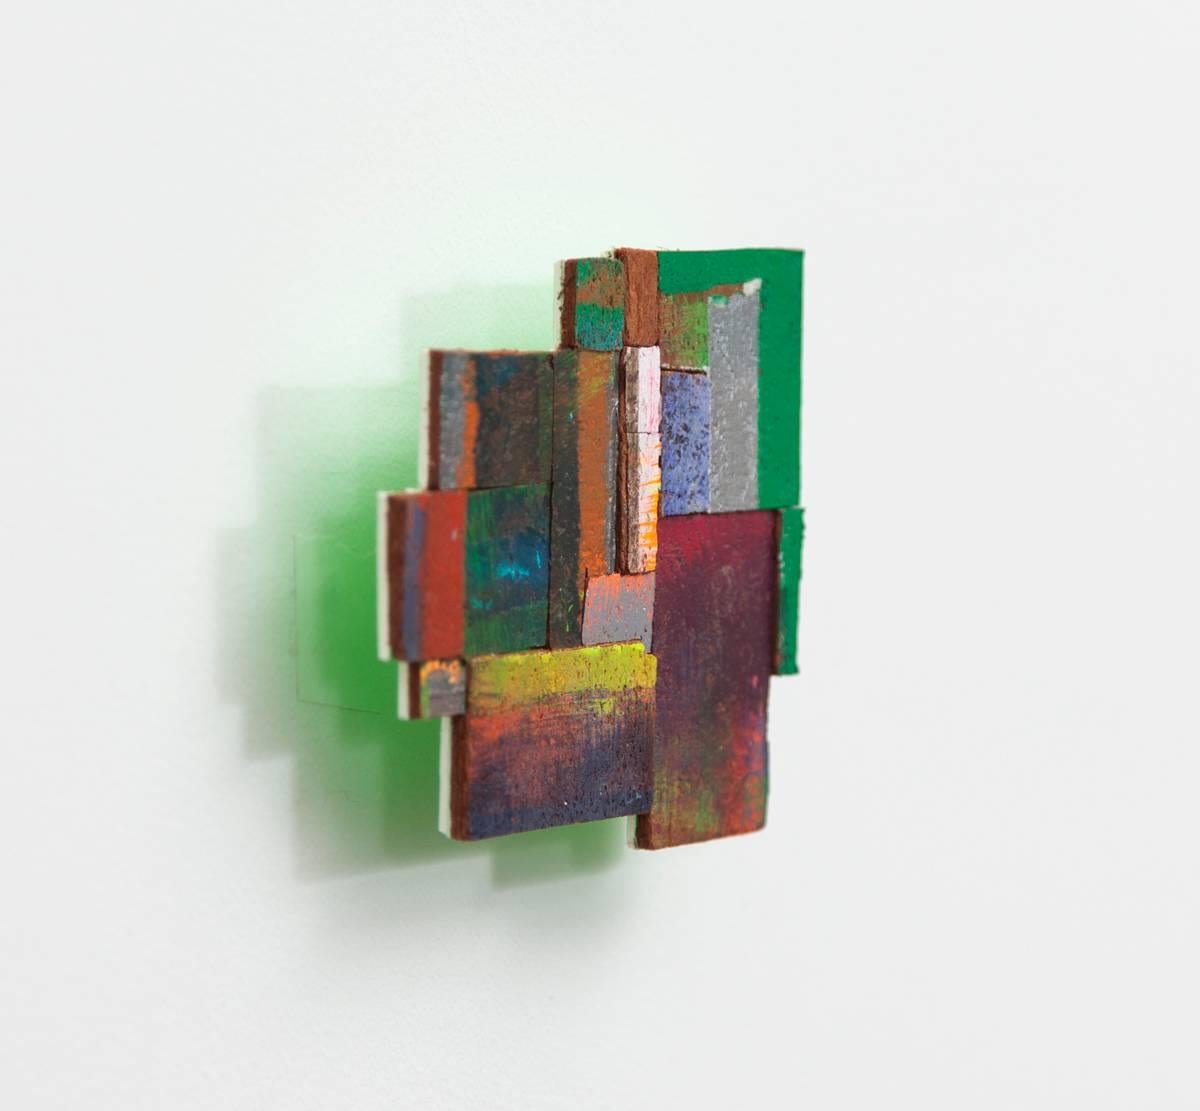 Joan Grubin, Detritus #14, Acrylic on pressed wood abstract wall sculpture, 2015 1